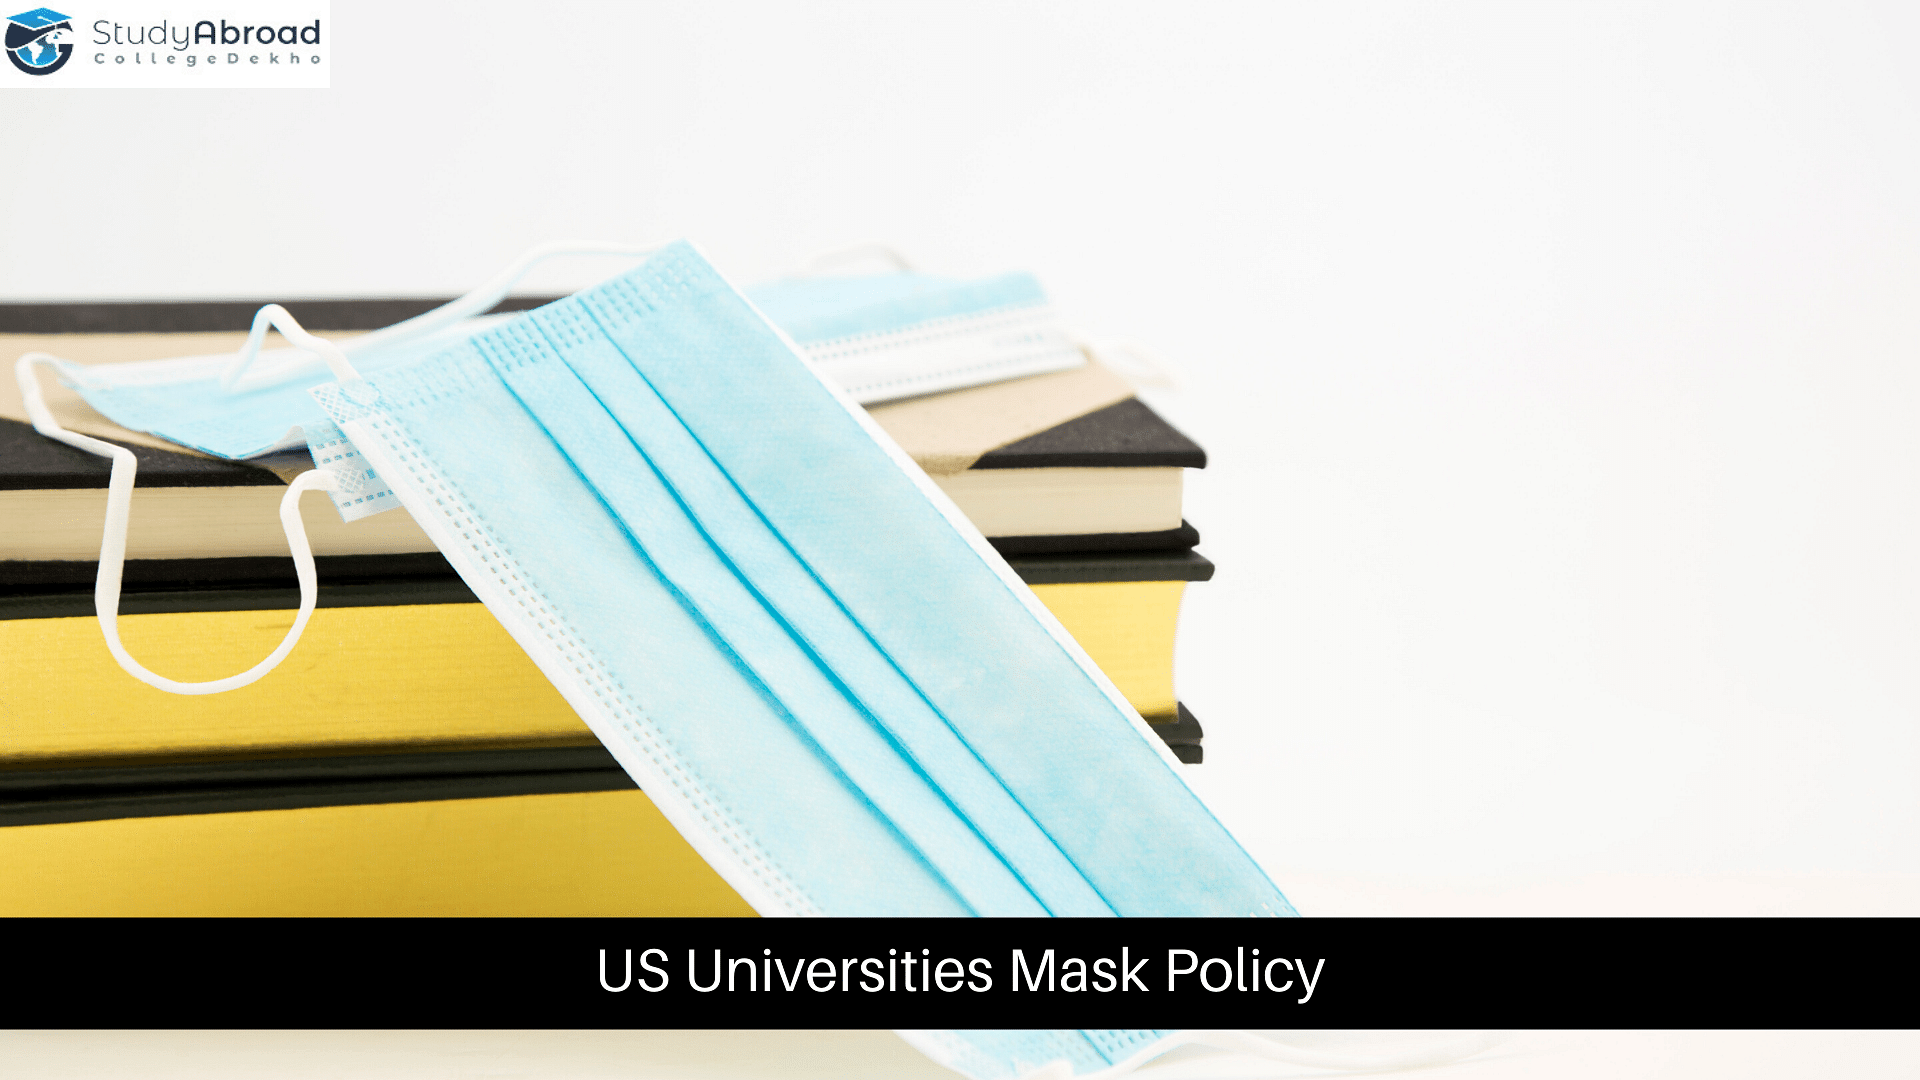 US Institutes Reinstate Indoor Mask Policy